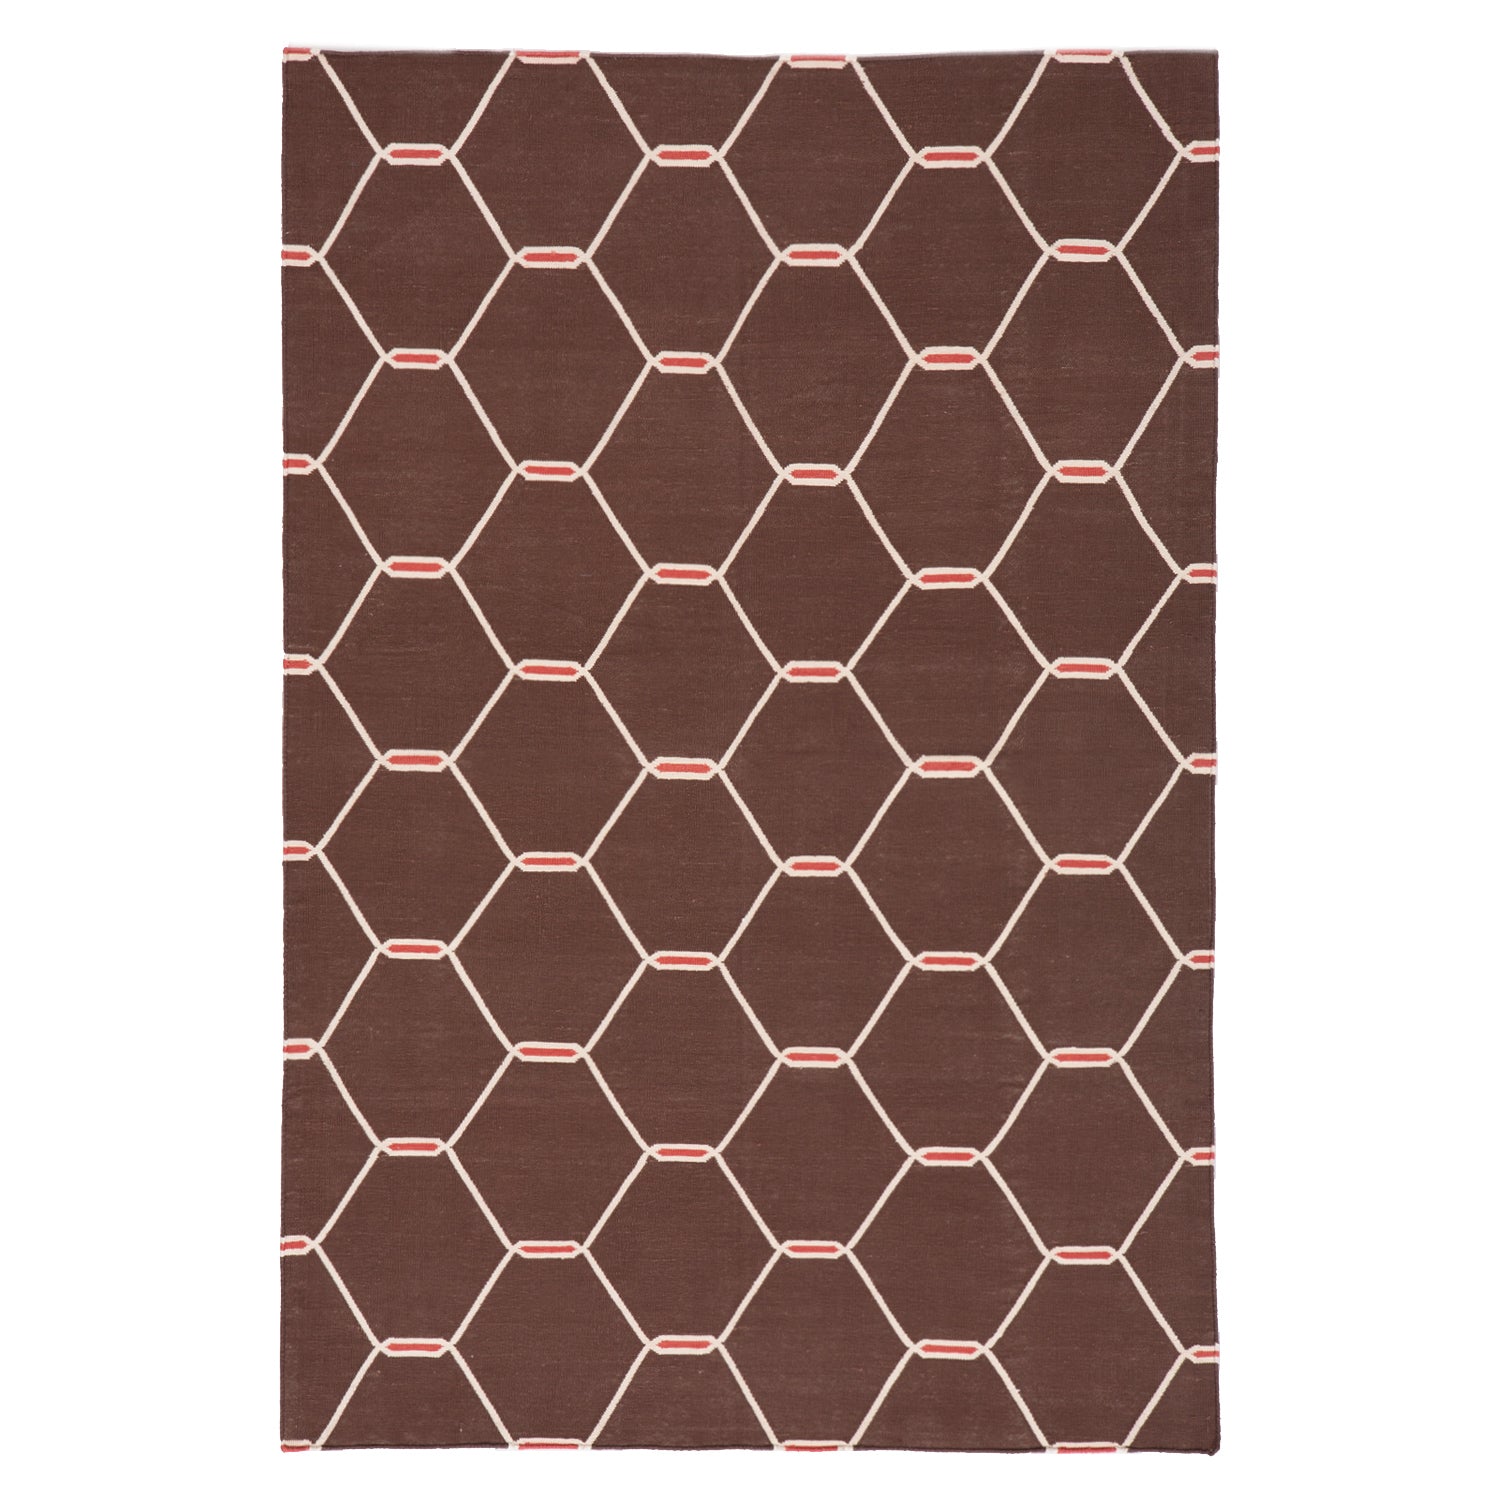 Modern rectangular rug with interconnected hexagon pattern in dark brown.